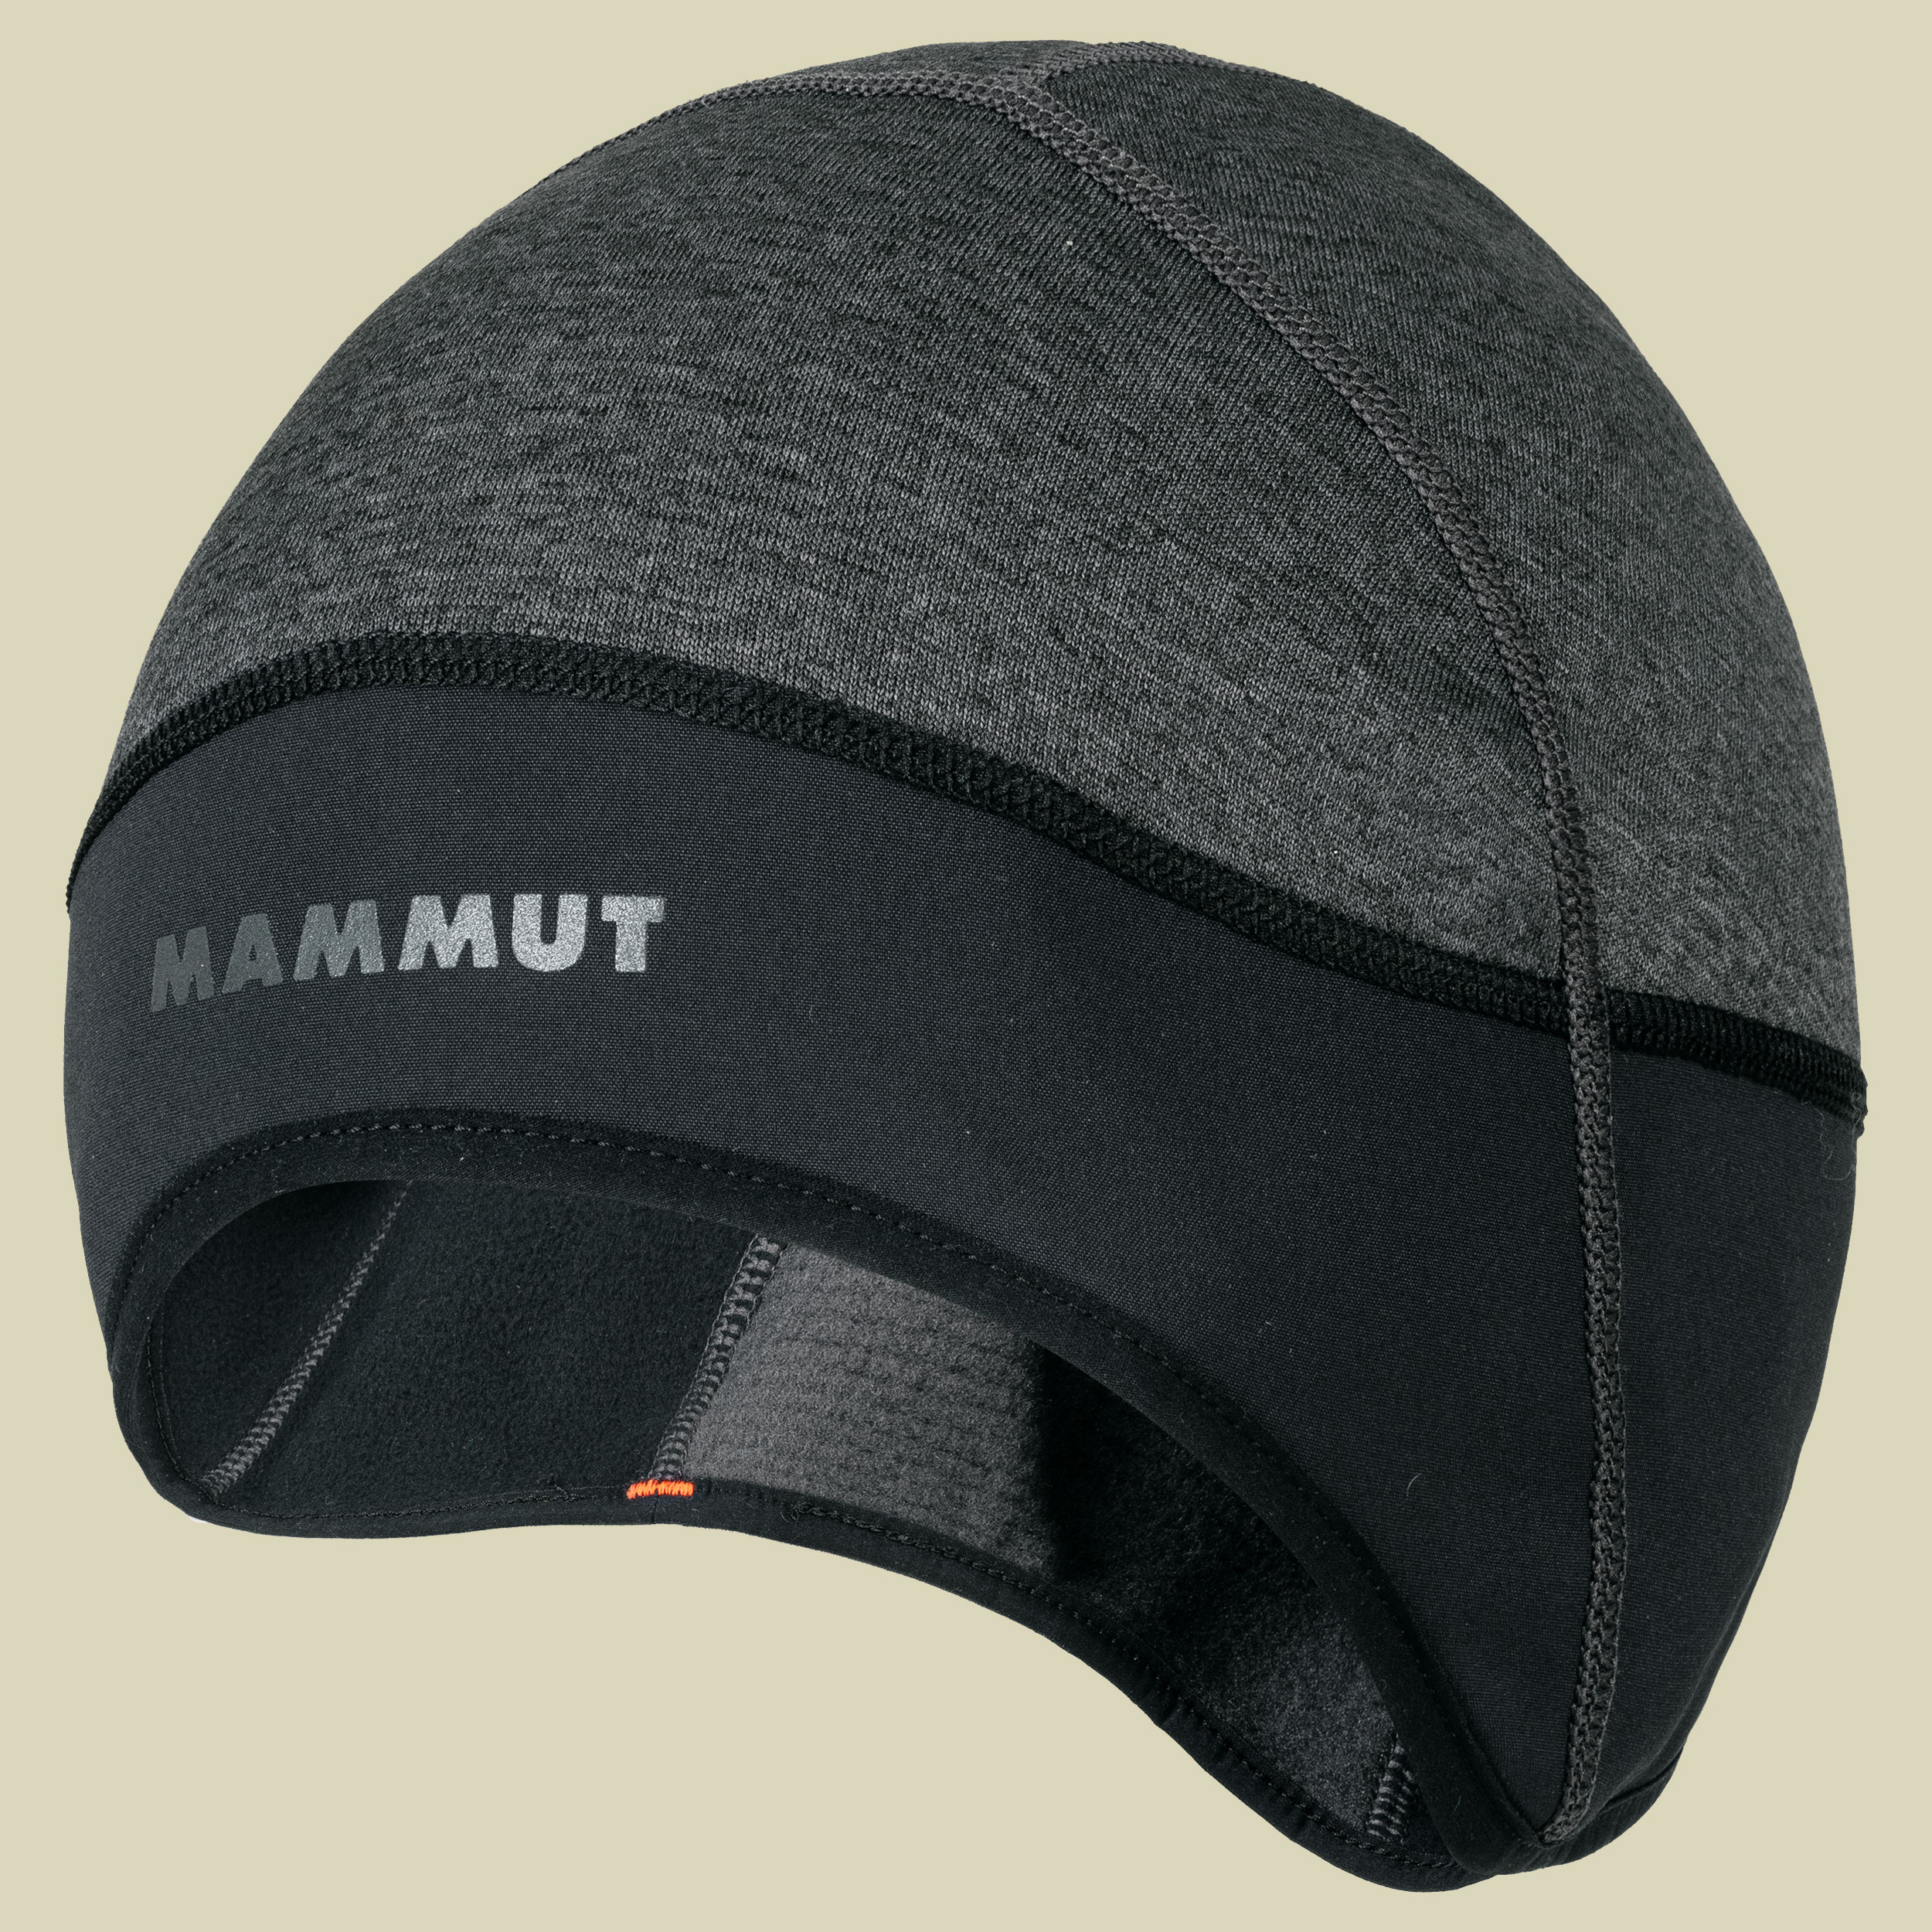 WS Helm Cap Größe L-XL Farbe black mélange-black